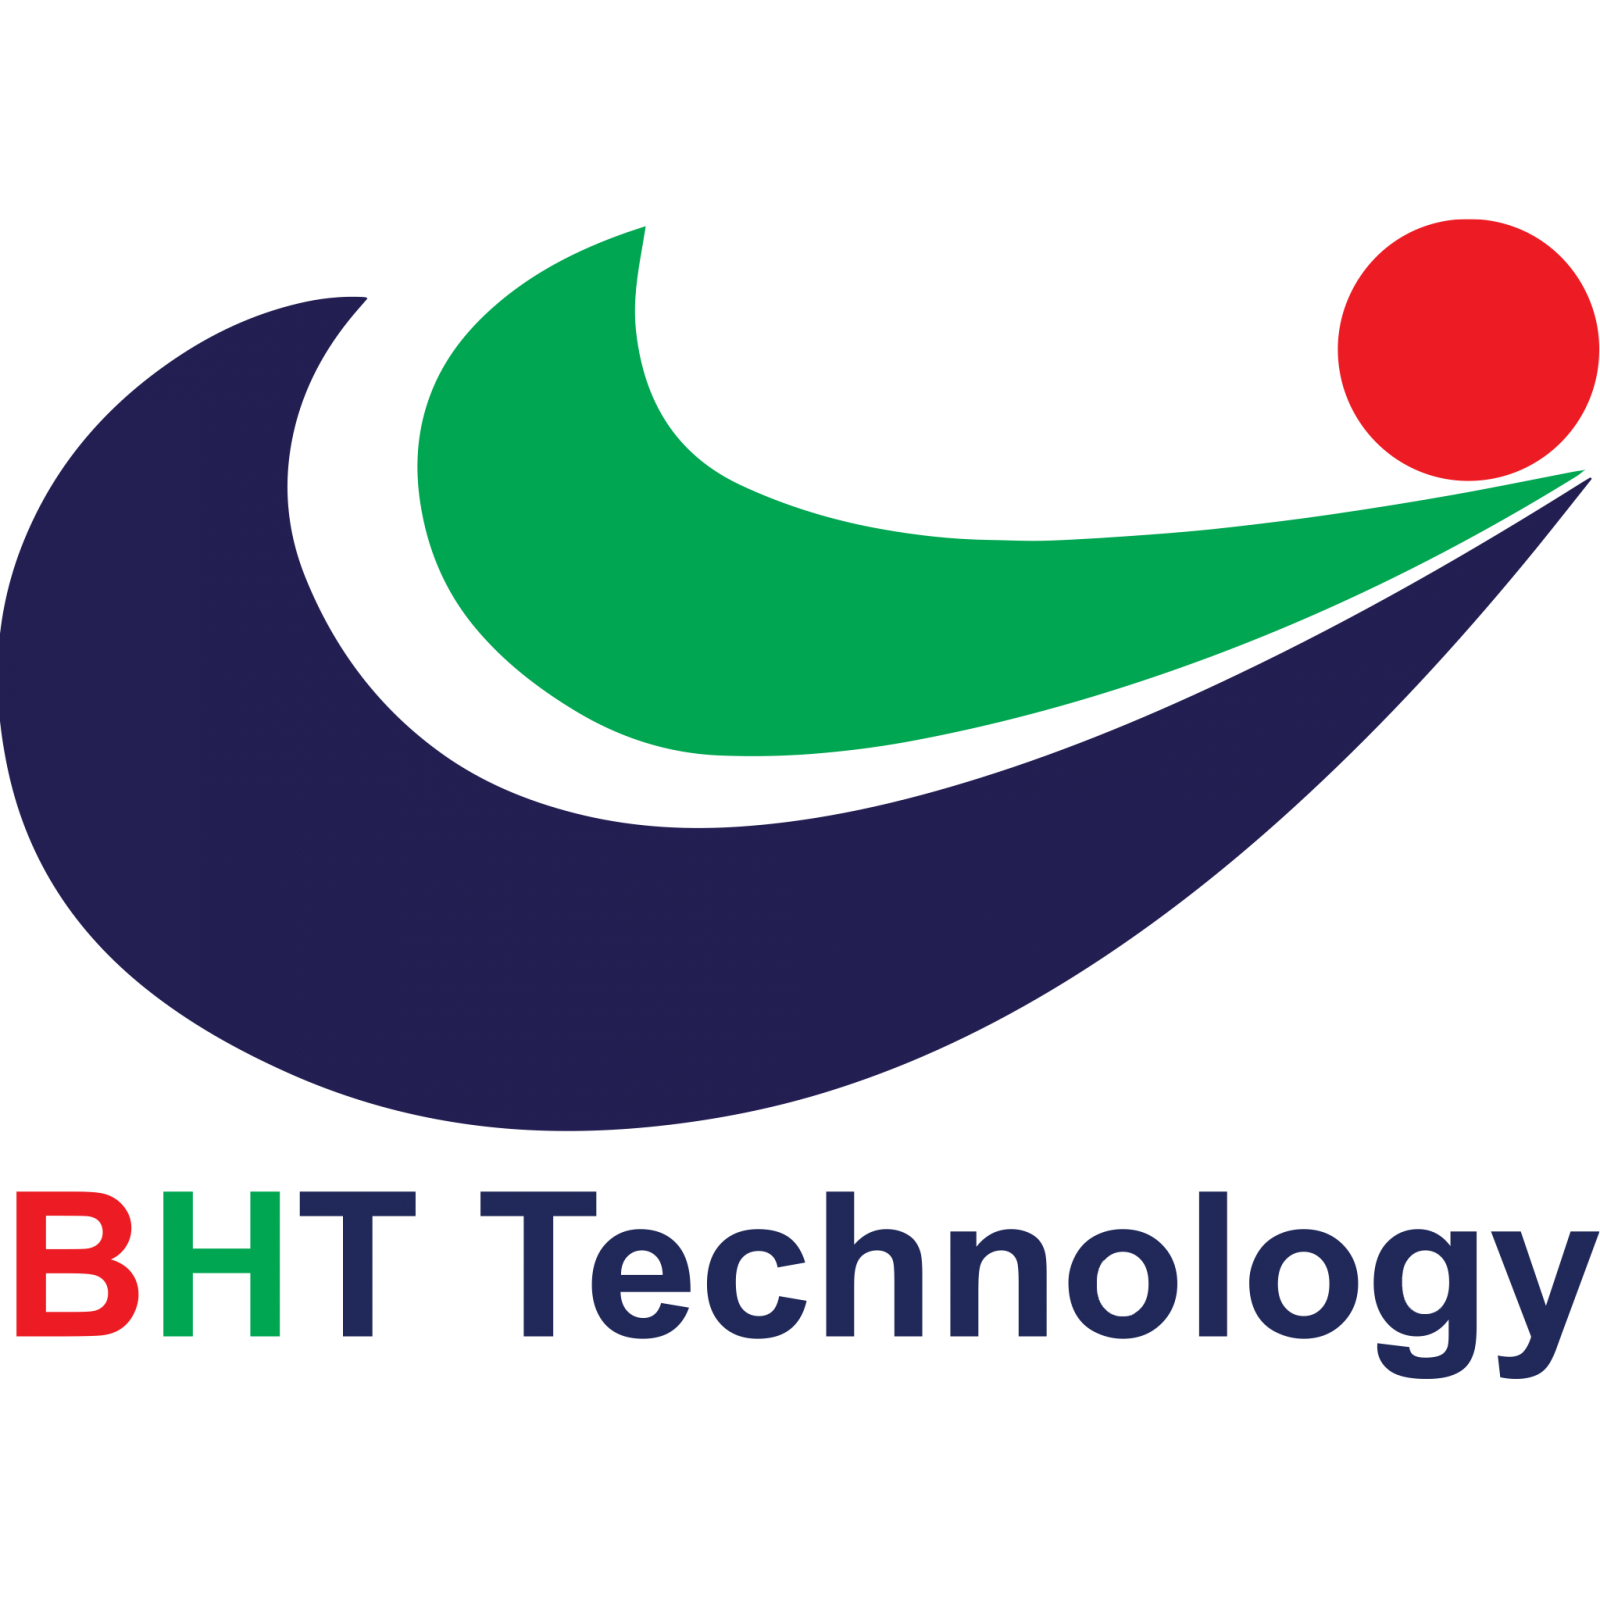 BHT technology